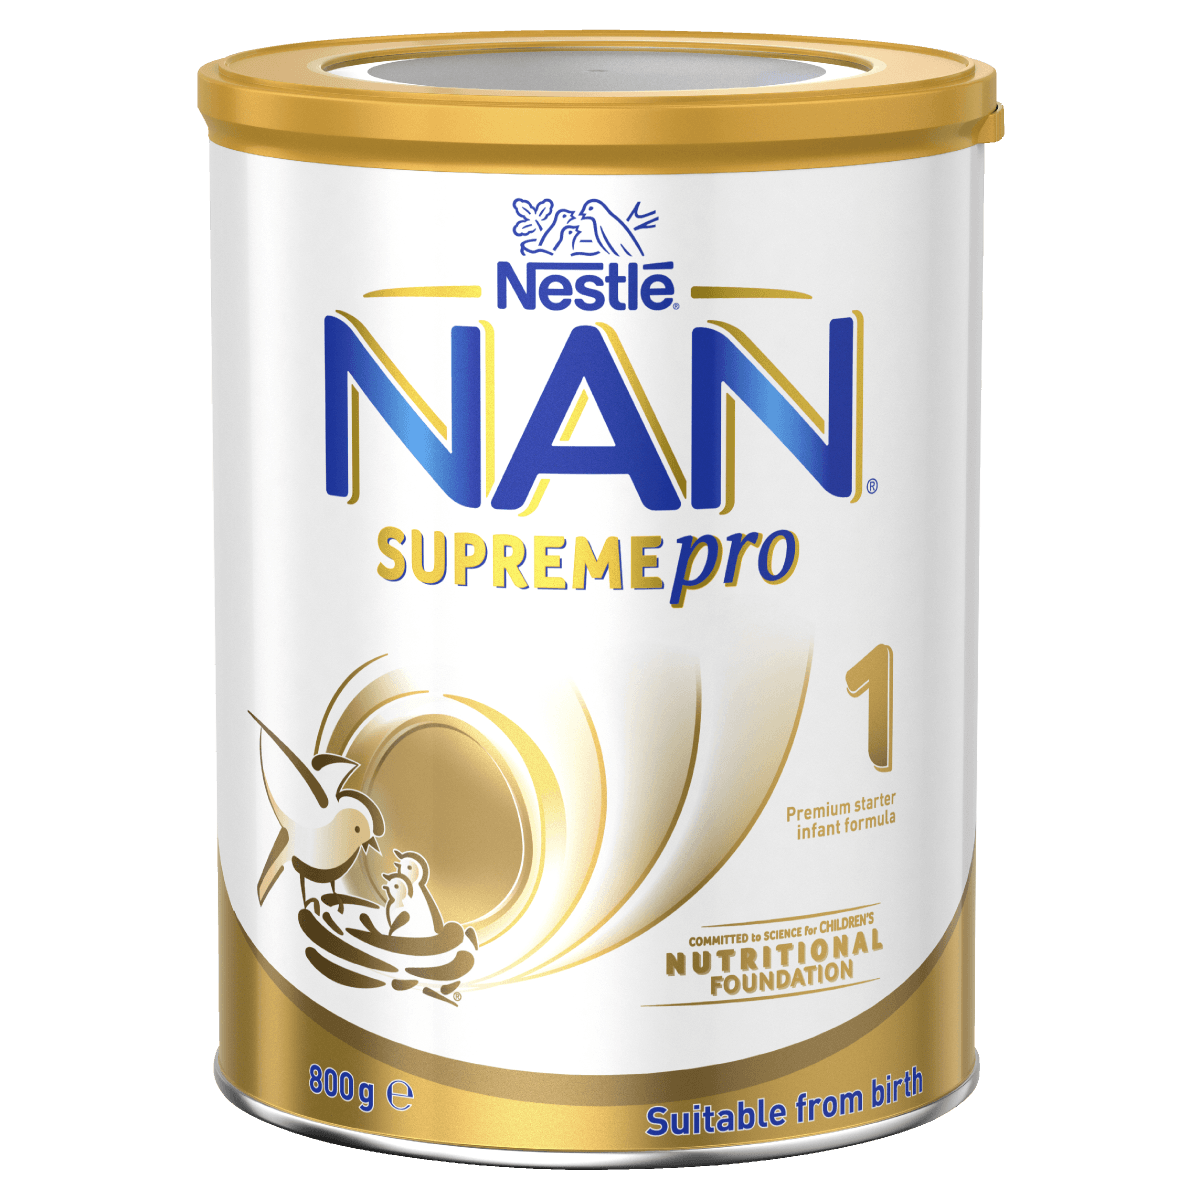 Nestle Nan Optipro Supreme 1 800g, PharmacyClub